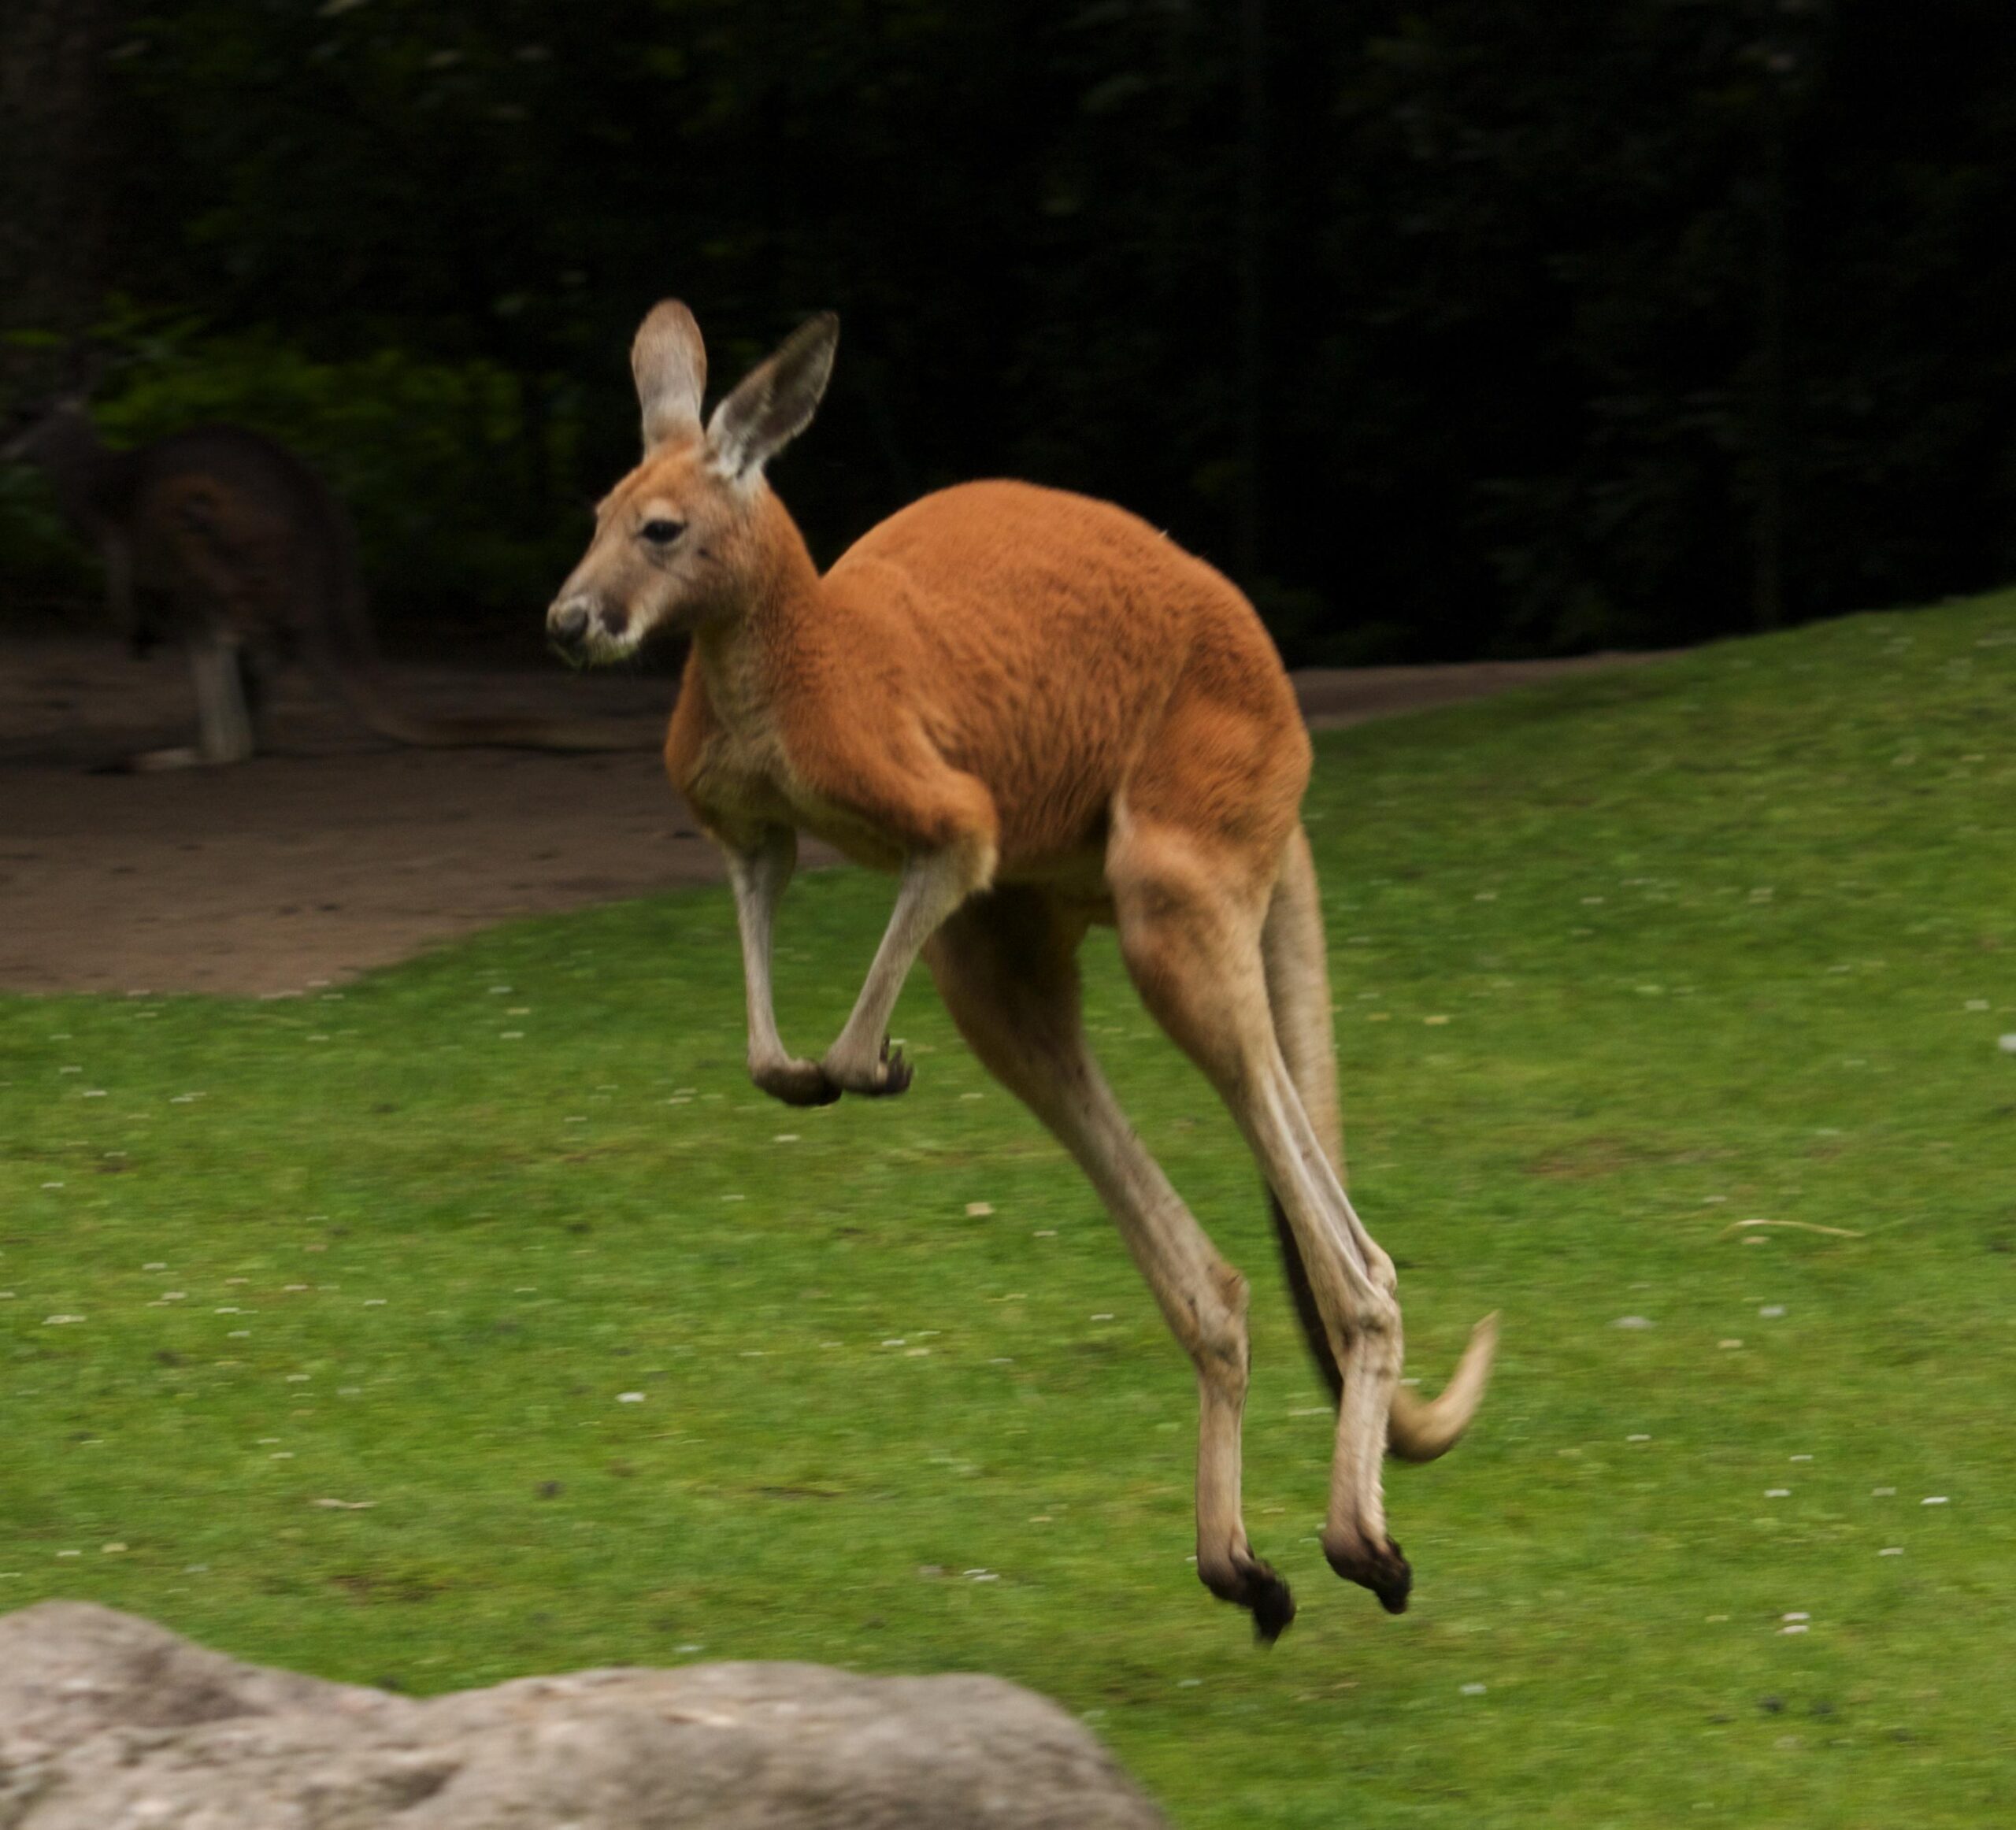 Kangaroo Pictures, High Quality Kangaroo Backgrounds and Wallpapers